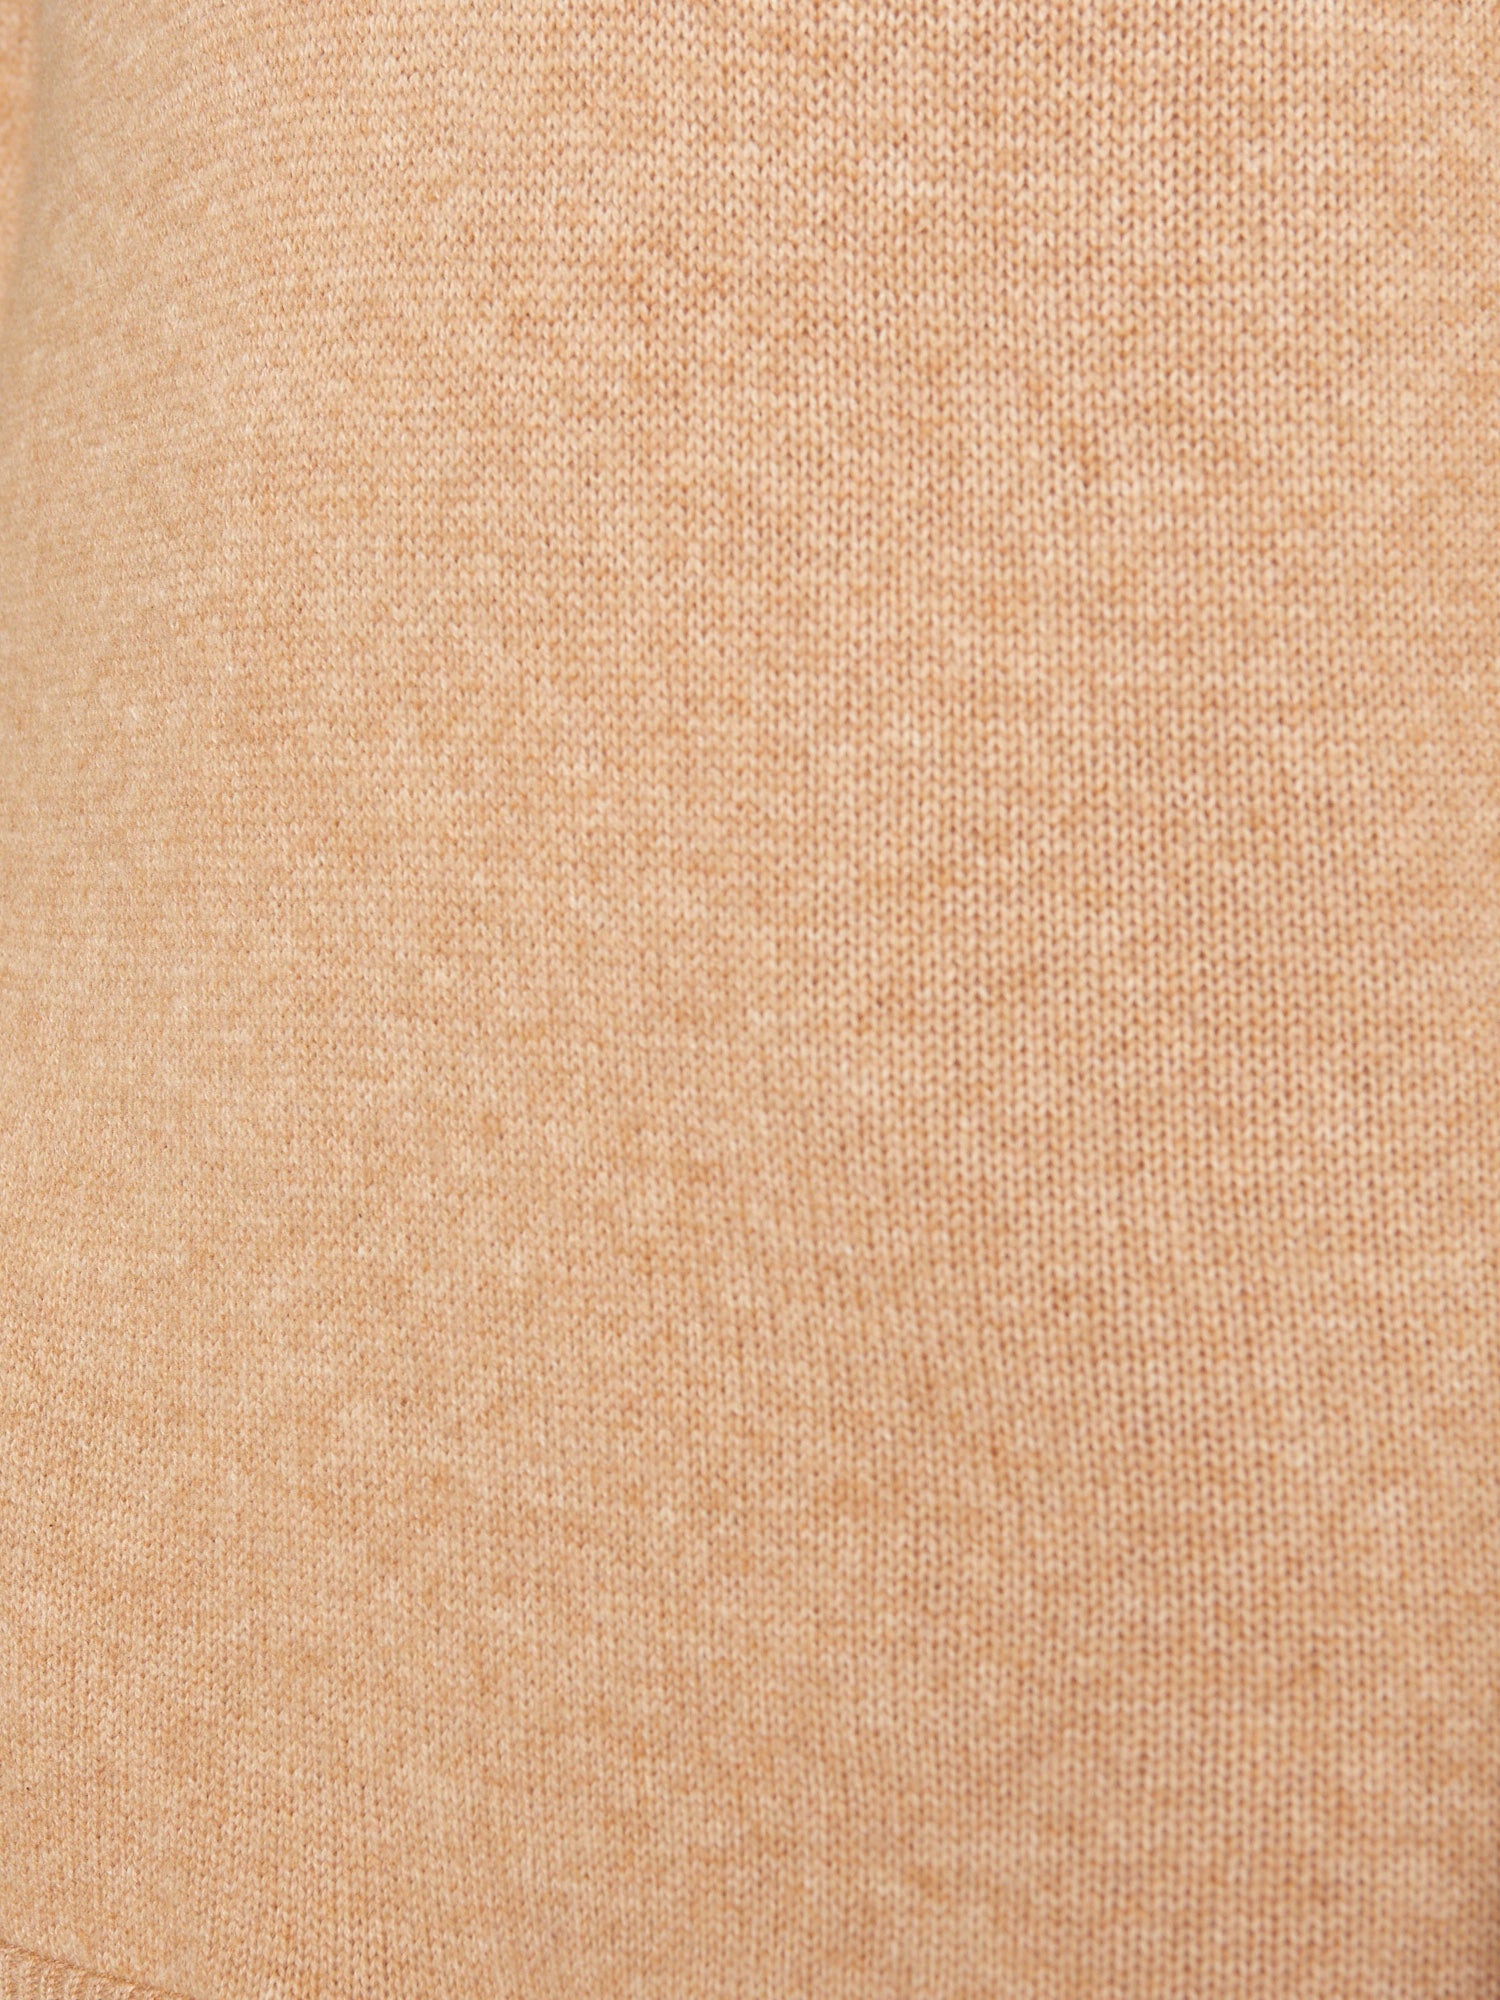 Looker layered v-neck tan mini sweater dress close up 3